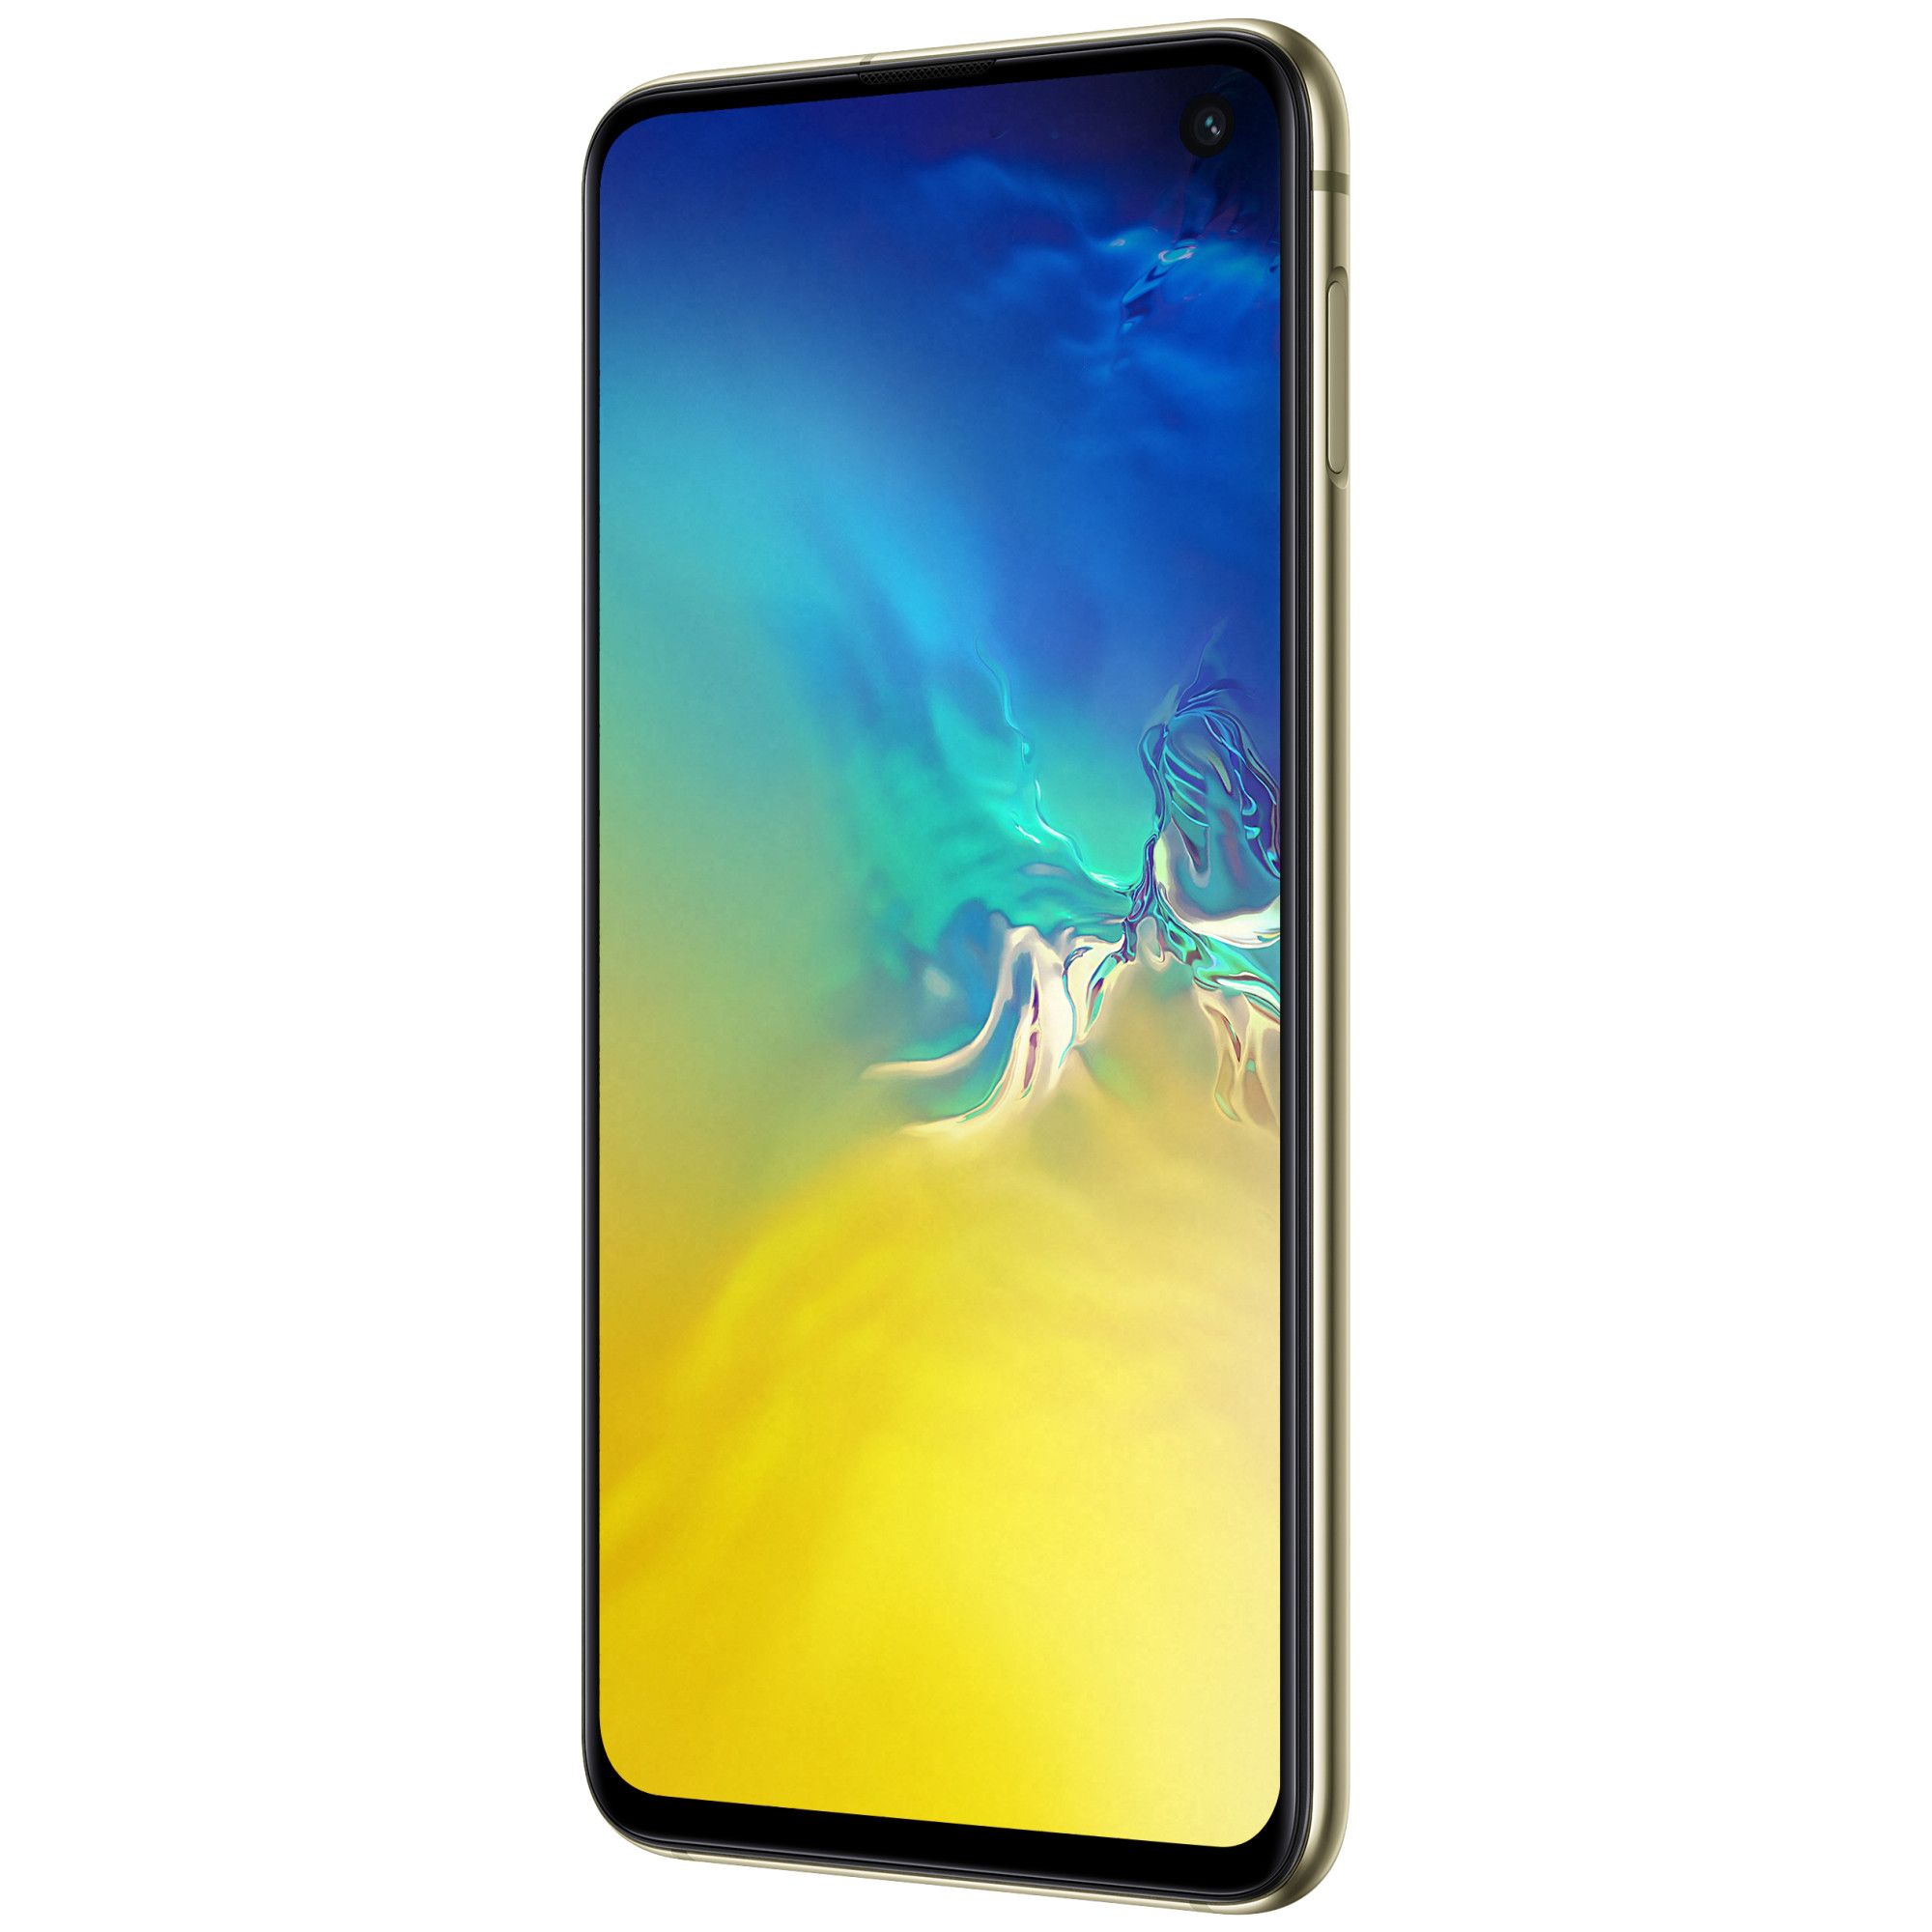 Samsung Galaxy S10e specs, review, release date PhonesData